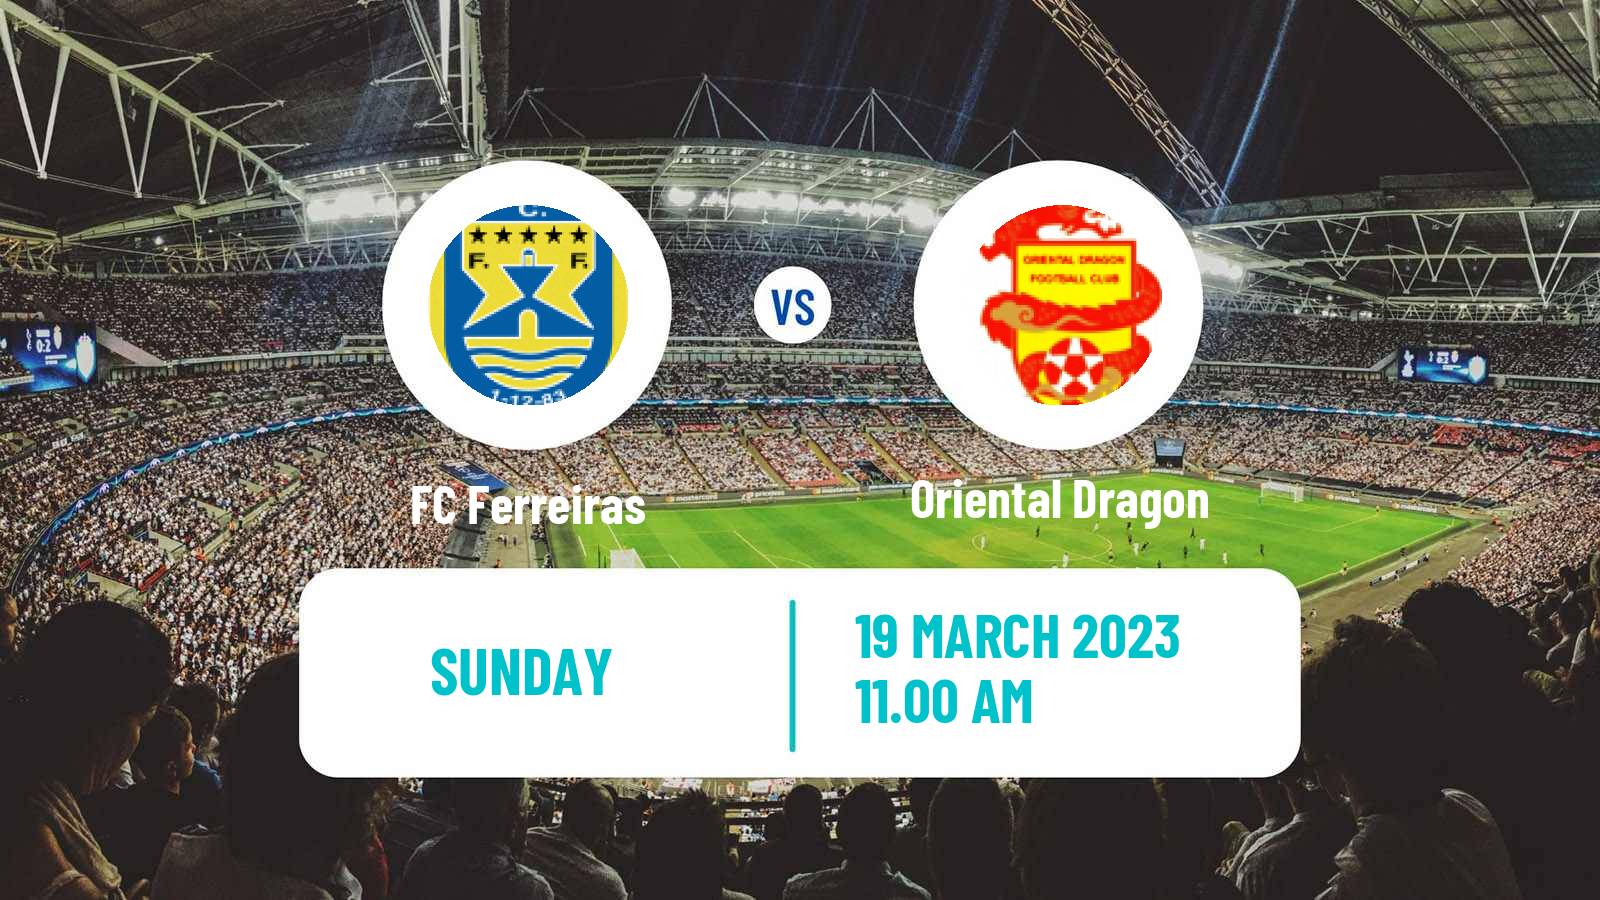 Soccer Campeonato de Portugal Ferreiras - Oriental Dragon